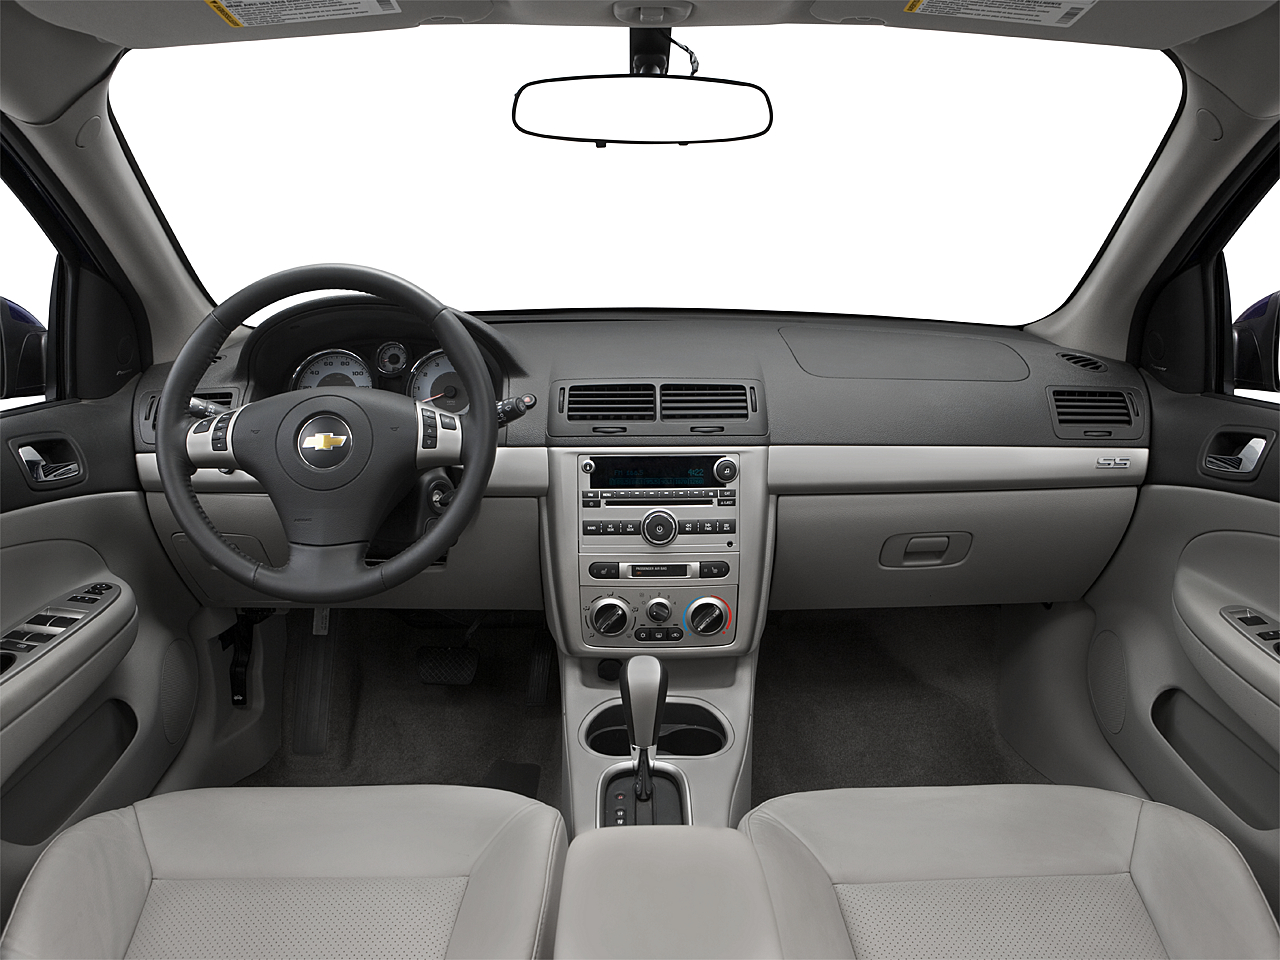 2007 Chevrolet Cobalt LT 4dr Sedan - Research - GrooveCar